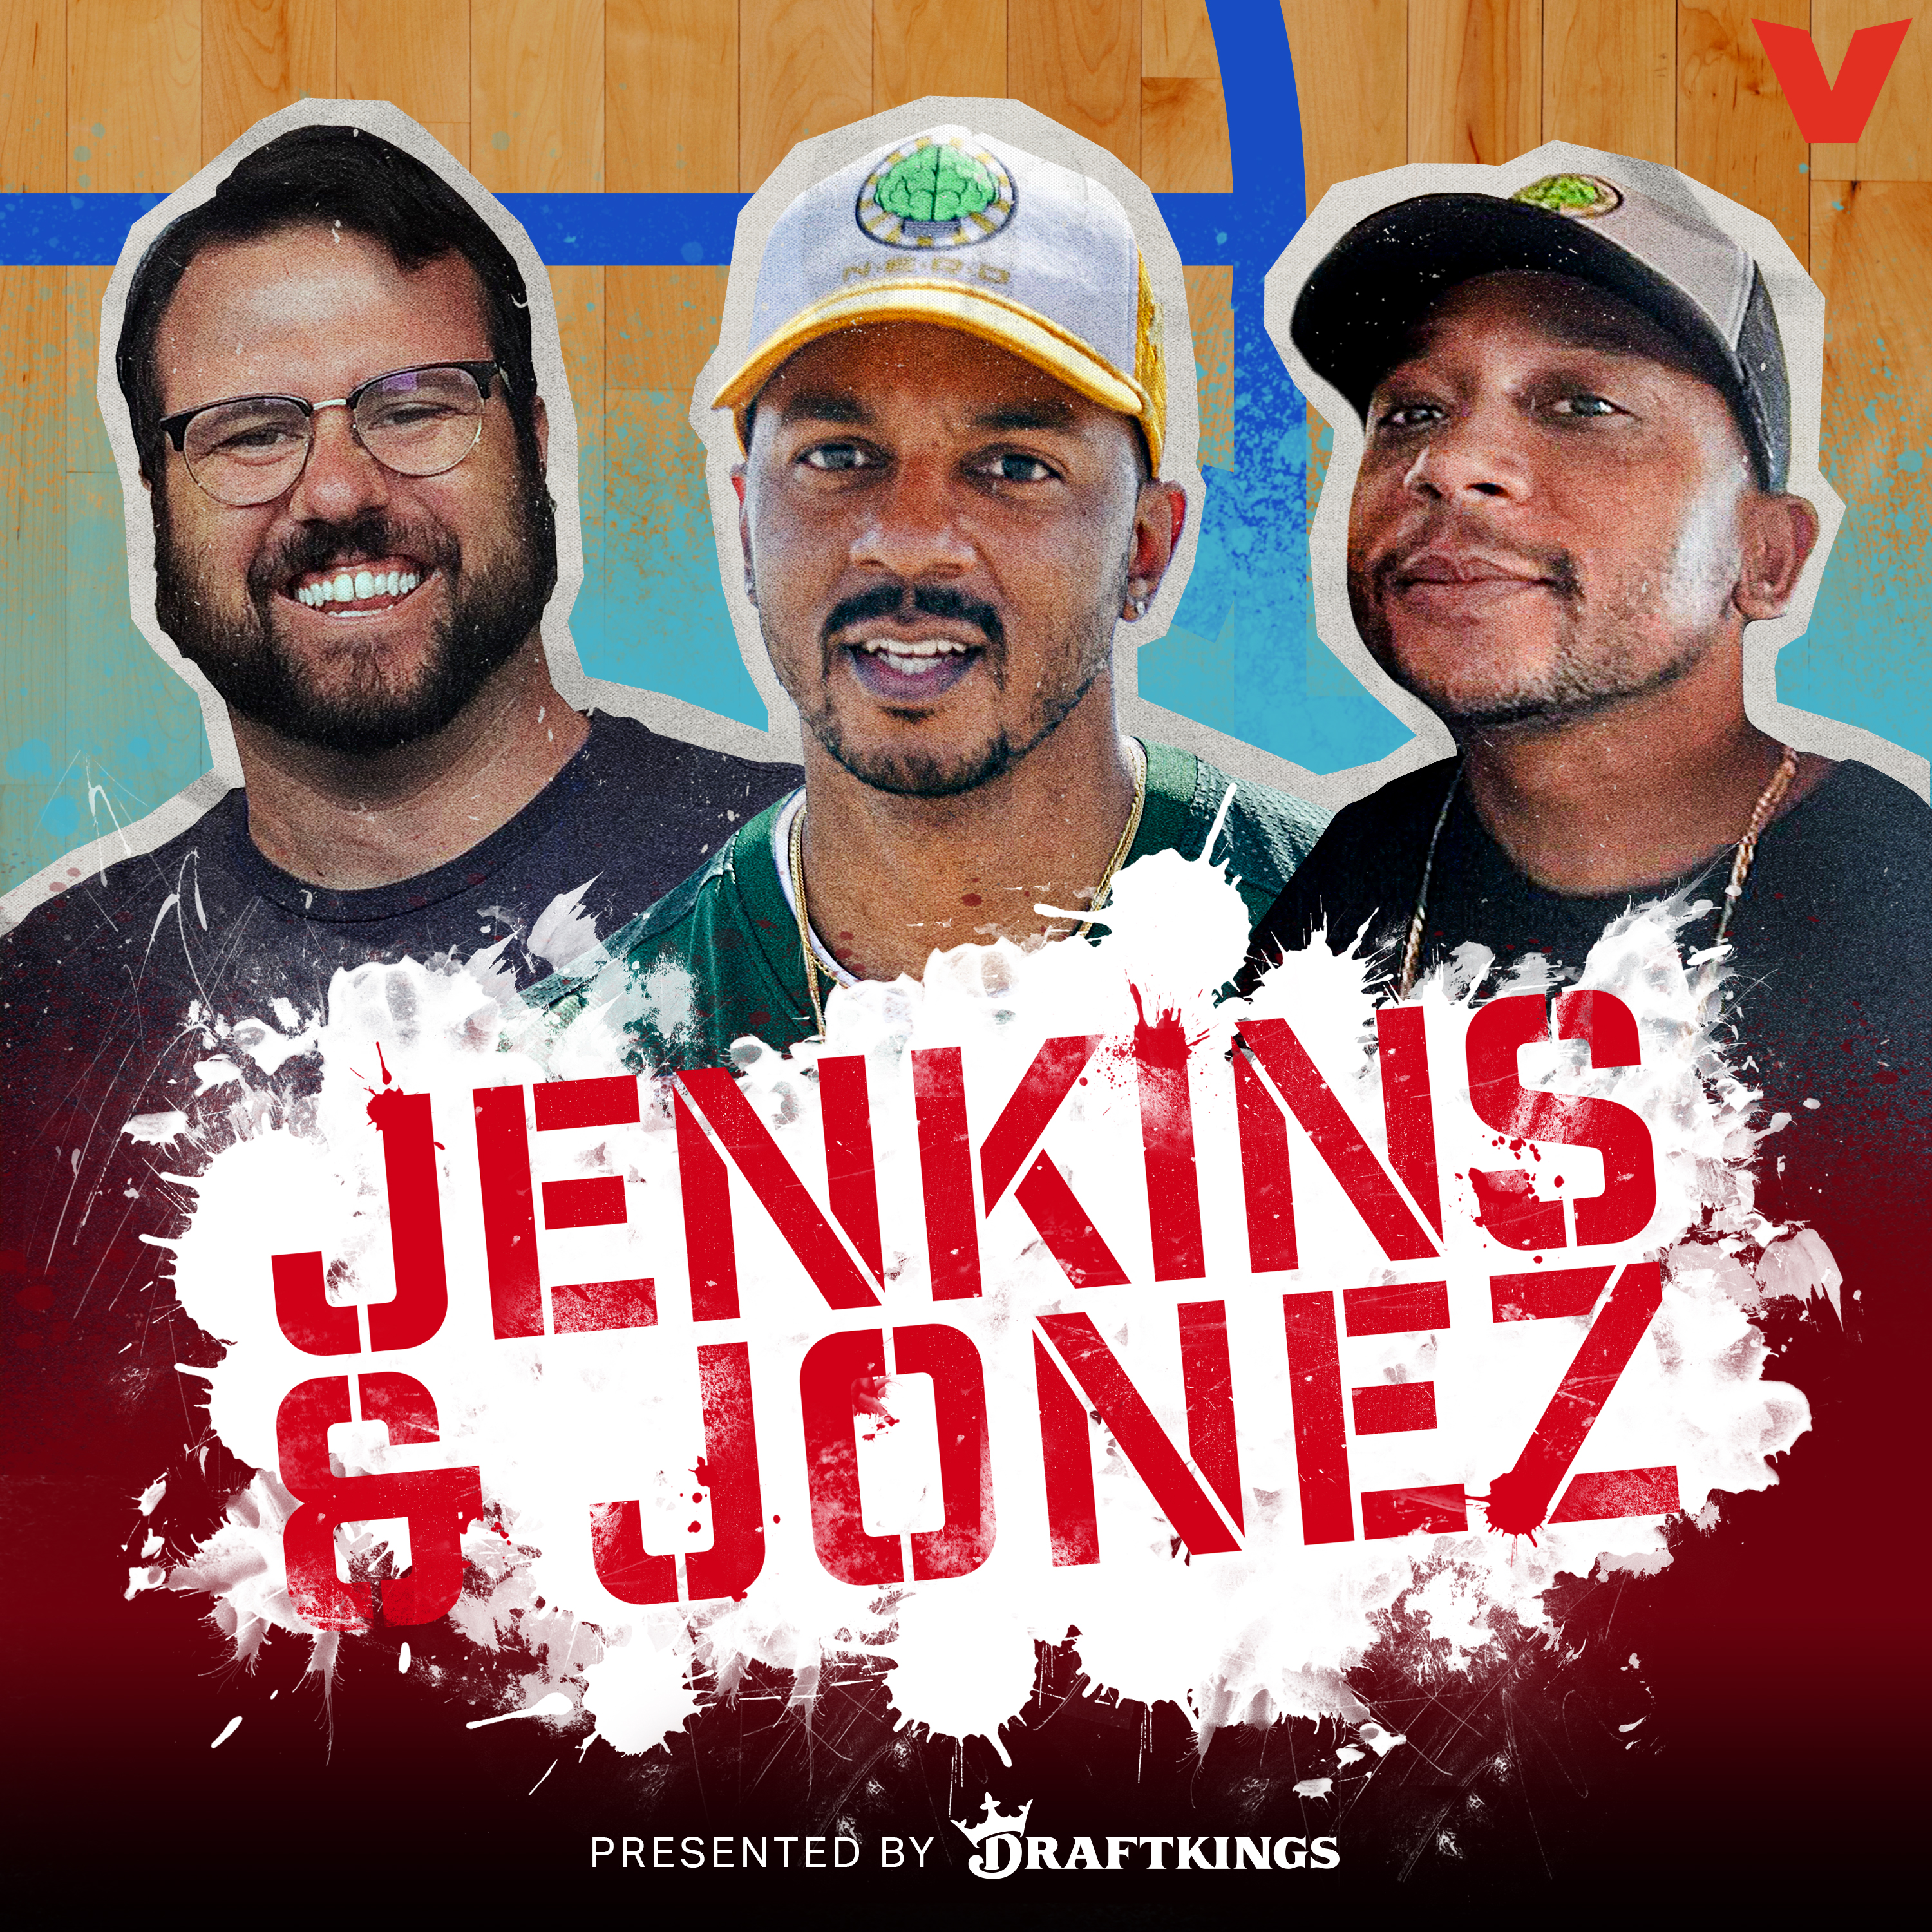 Jenkins and Jonez - Entanglements, Indictments, and Alien Basketball Players